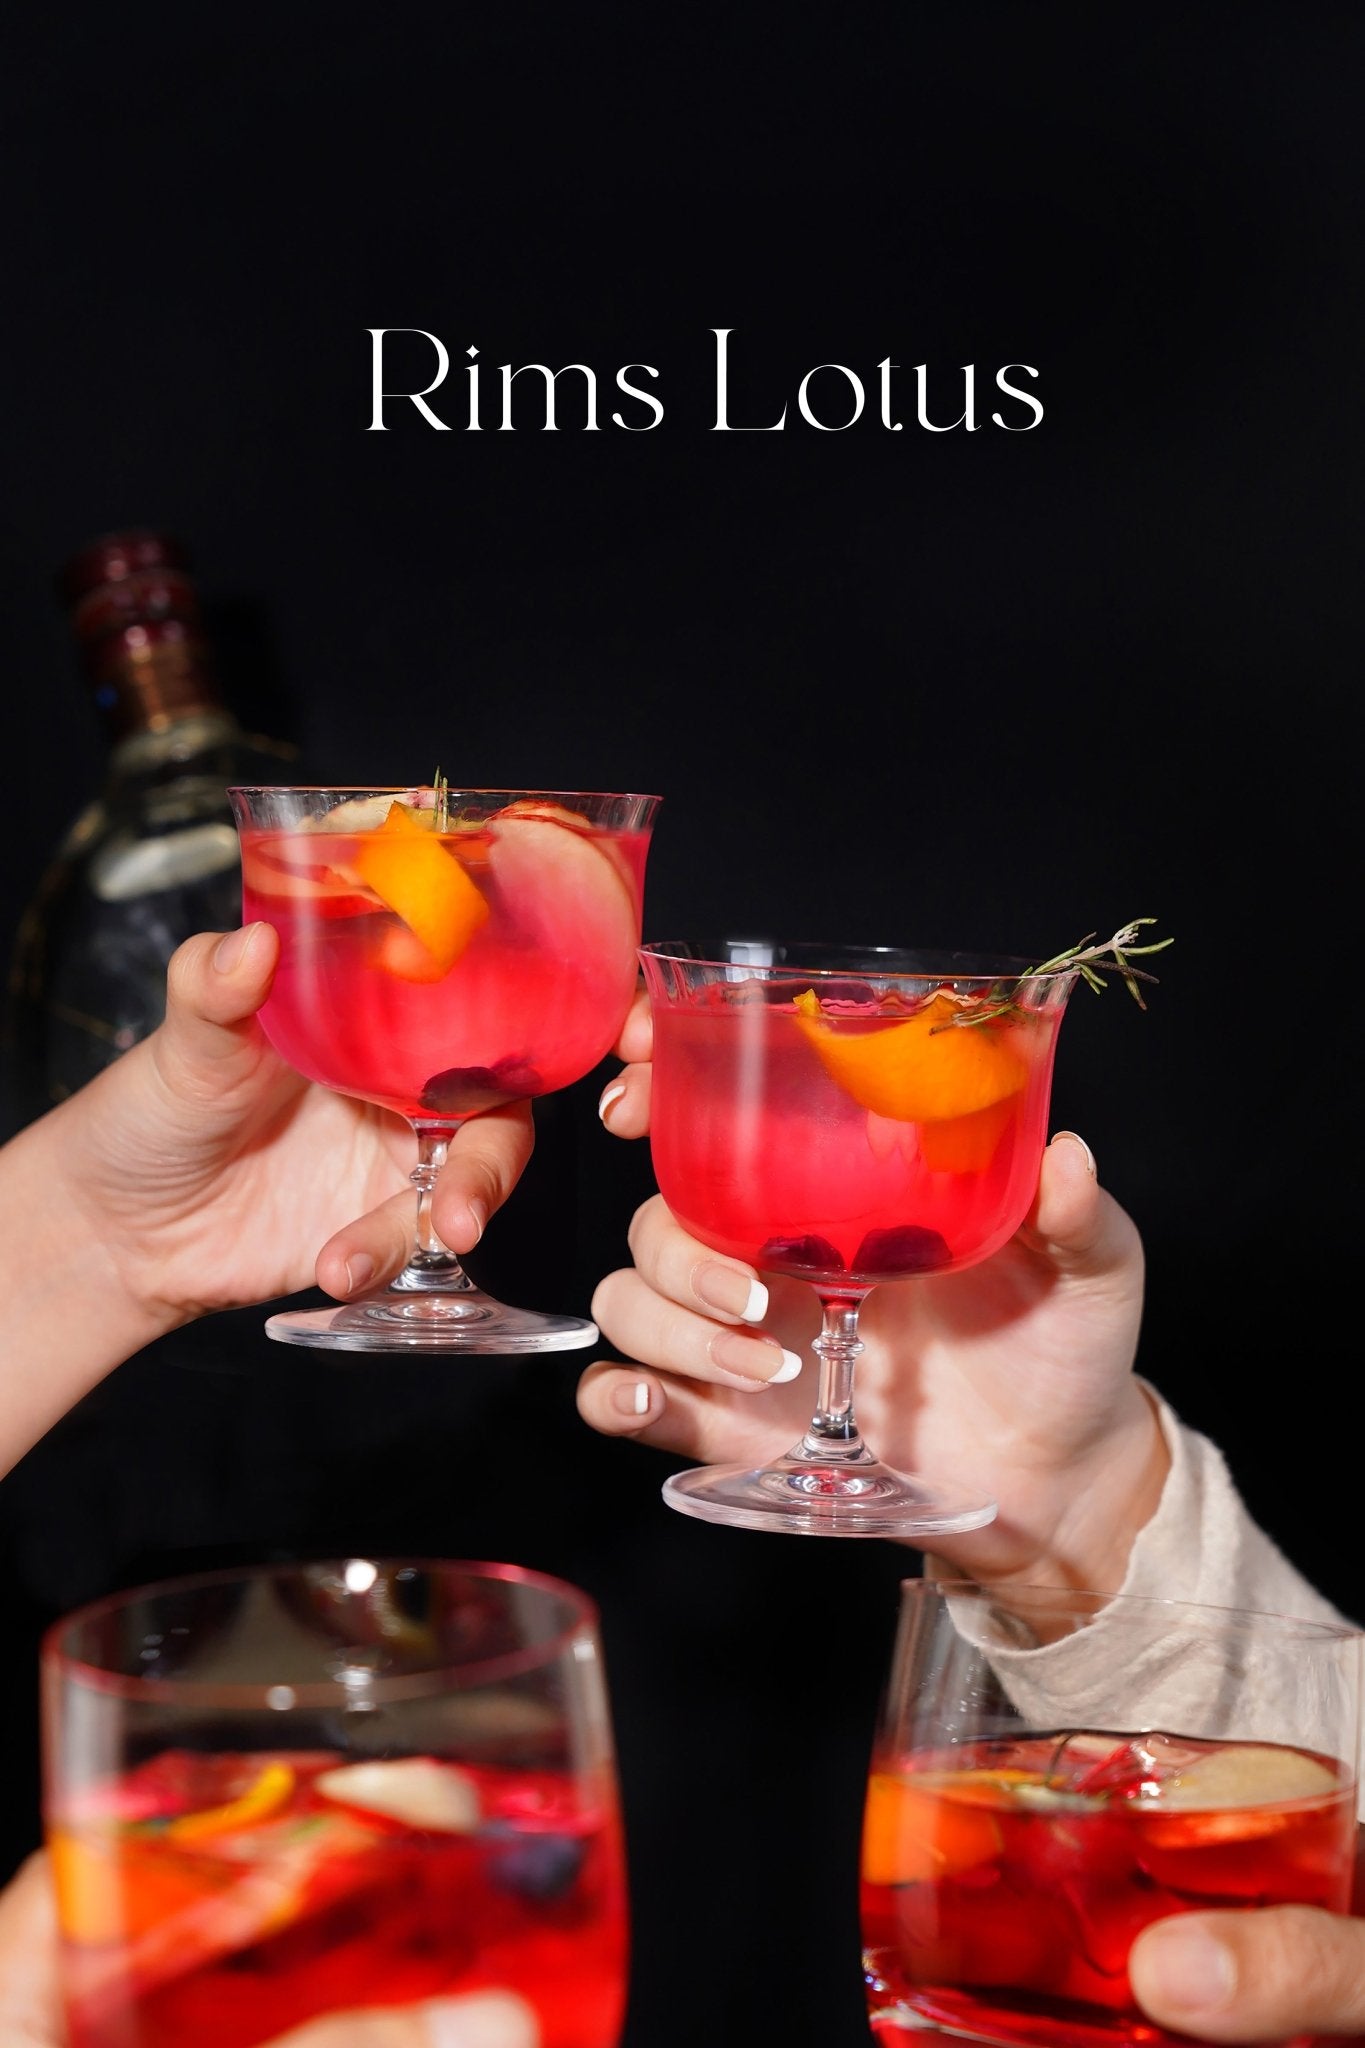 Rims Lotus -  Ribbed Martini & Wine Glasses - Set of 2